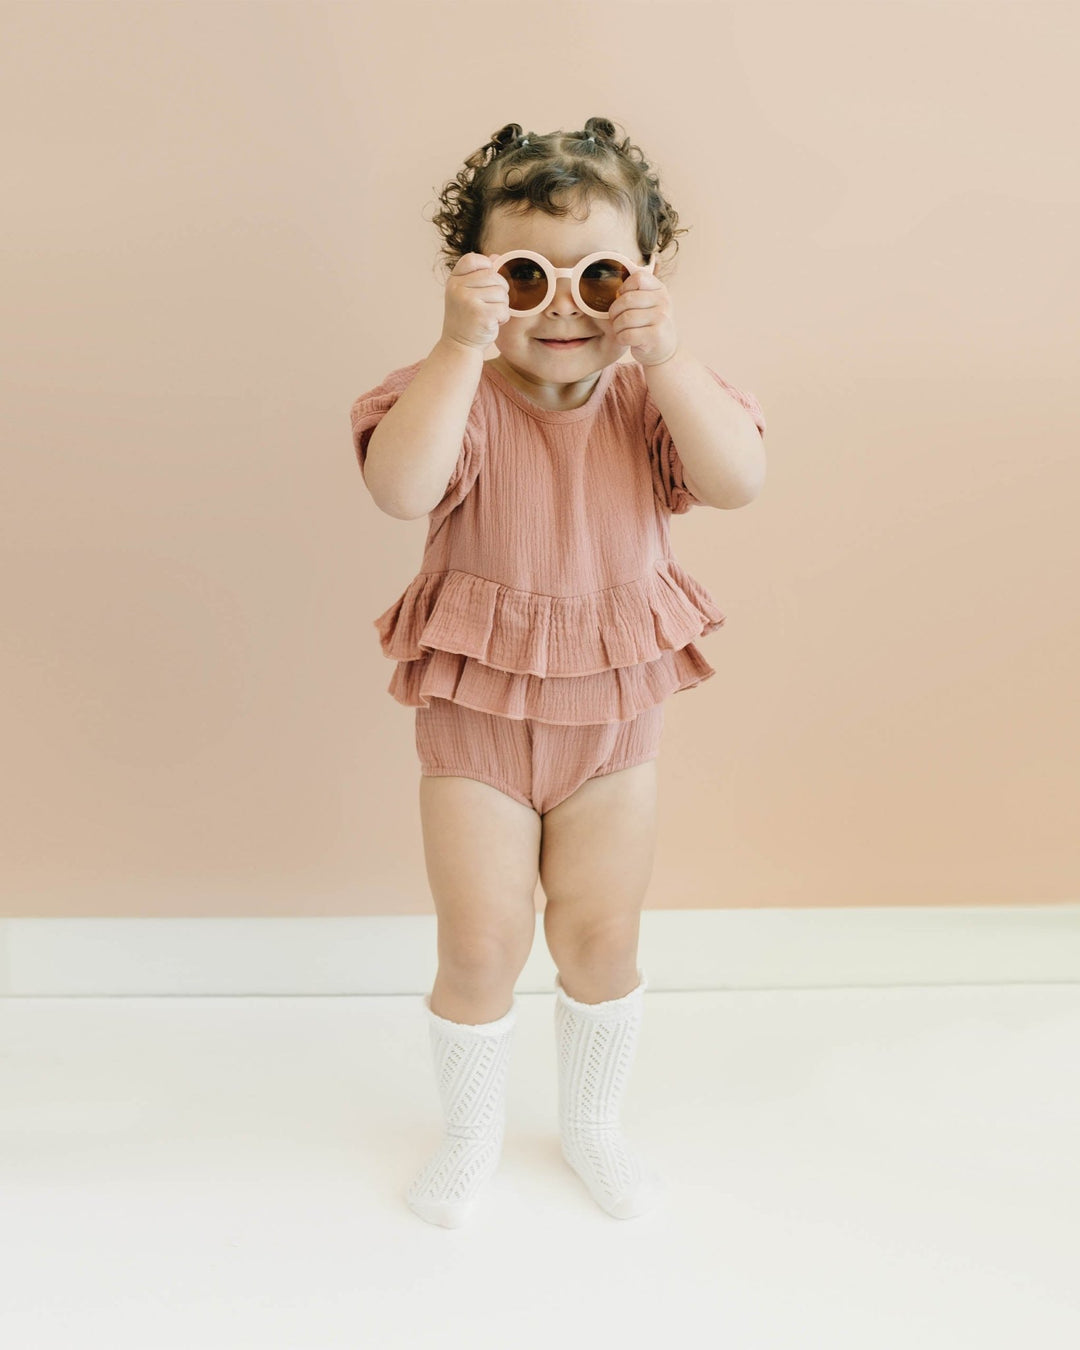 Double Ruffle Muslin Romper - BABY GIRL CLOTHES - LUCKY PANDA KIDS